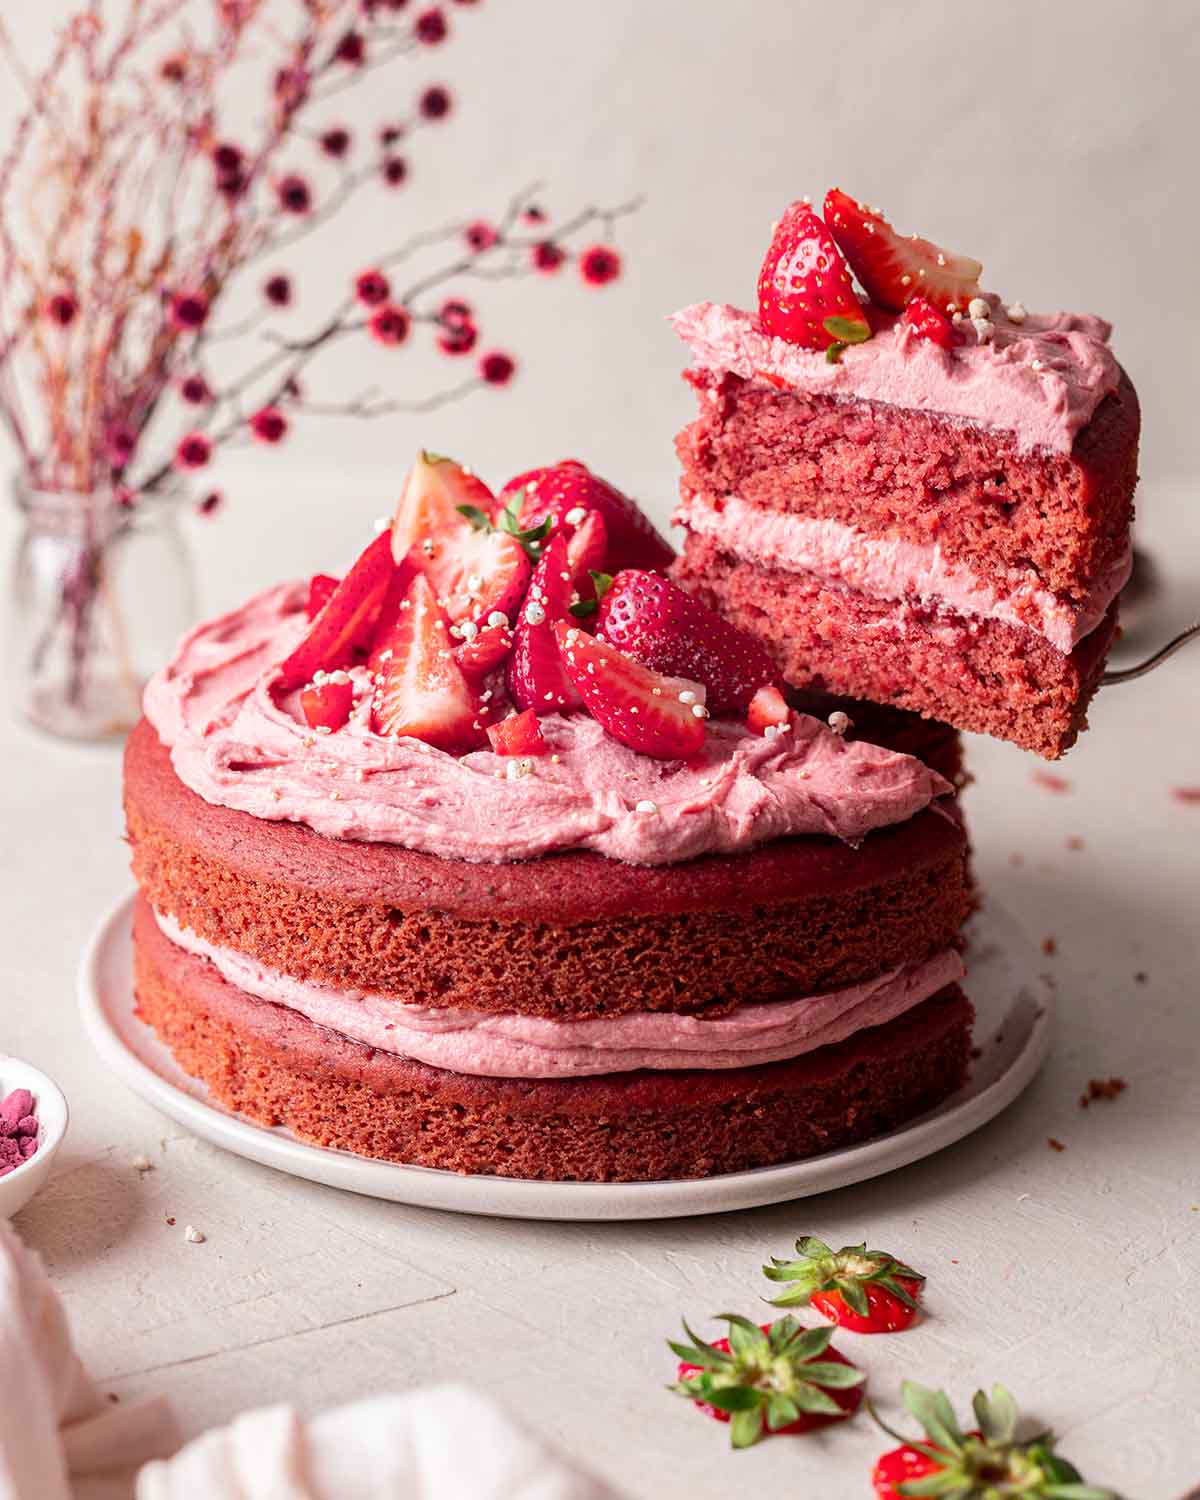 Vegan Strawberry Cake from Rainbow Nourishments - Vegan Strawberry Dessert Recipes